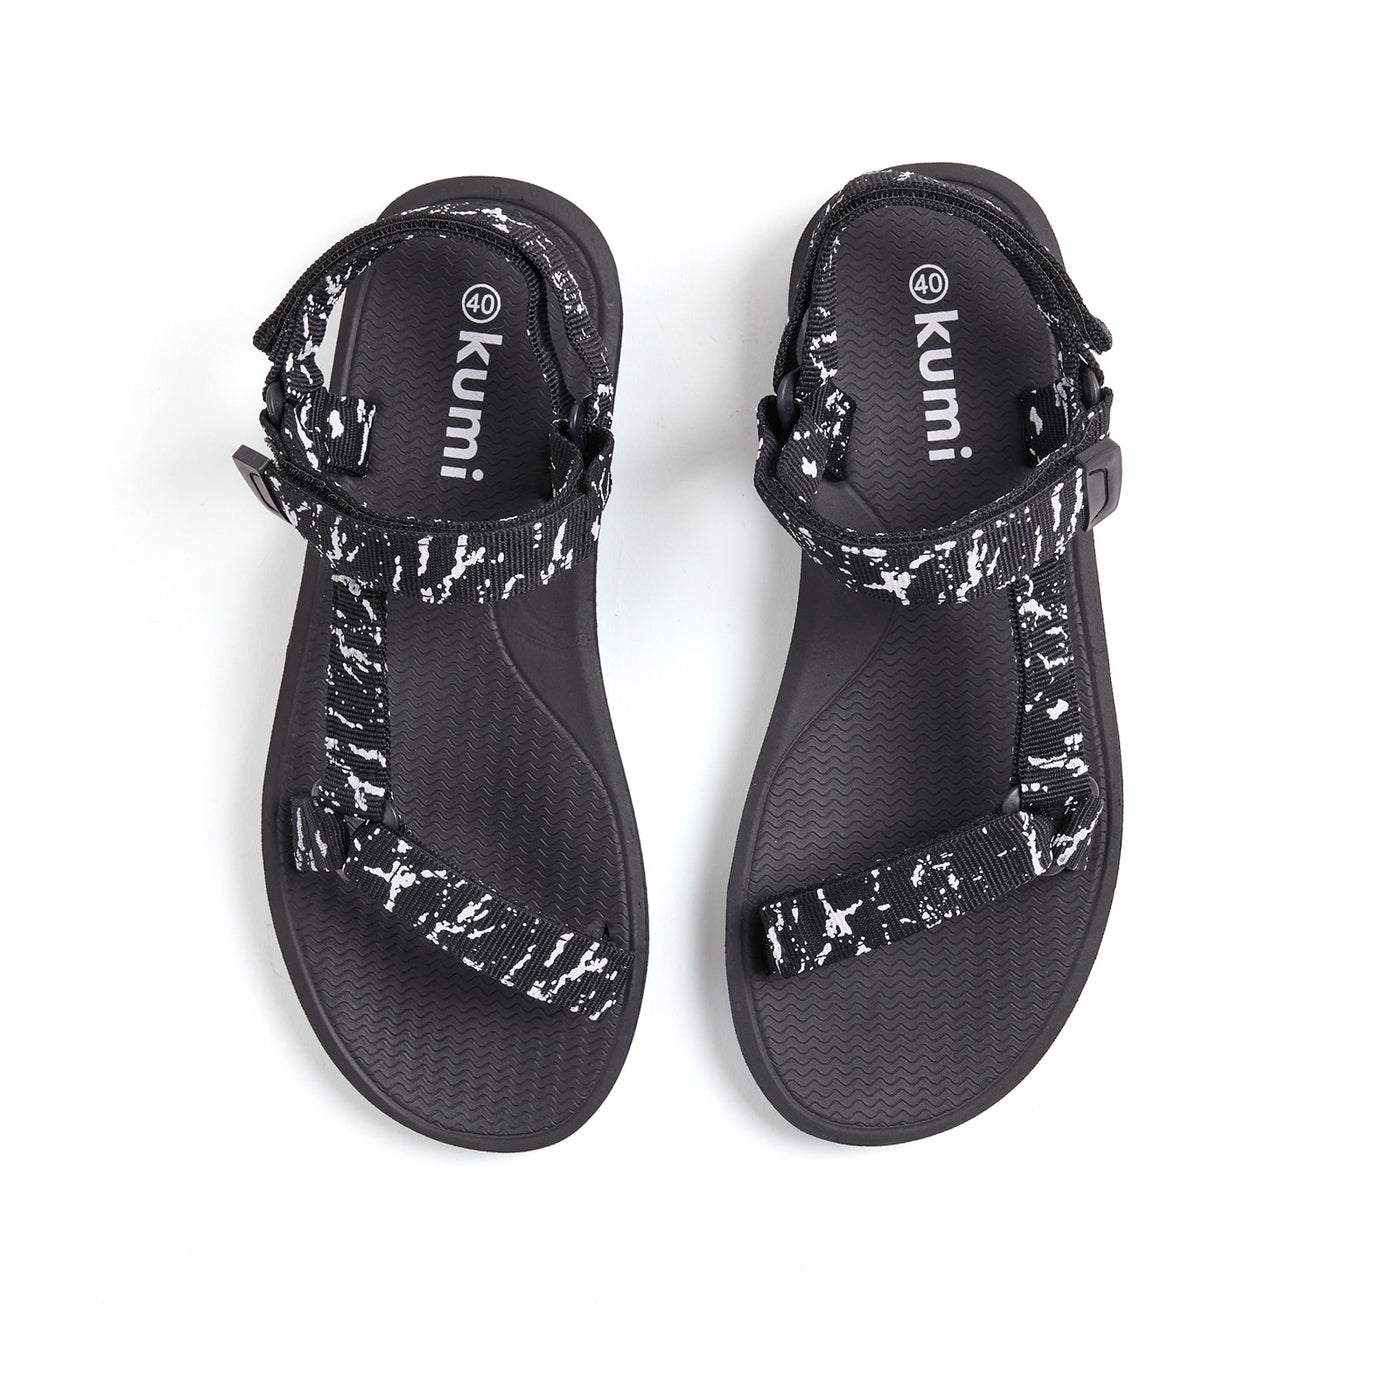 Black/white sandals